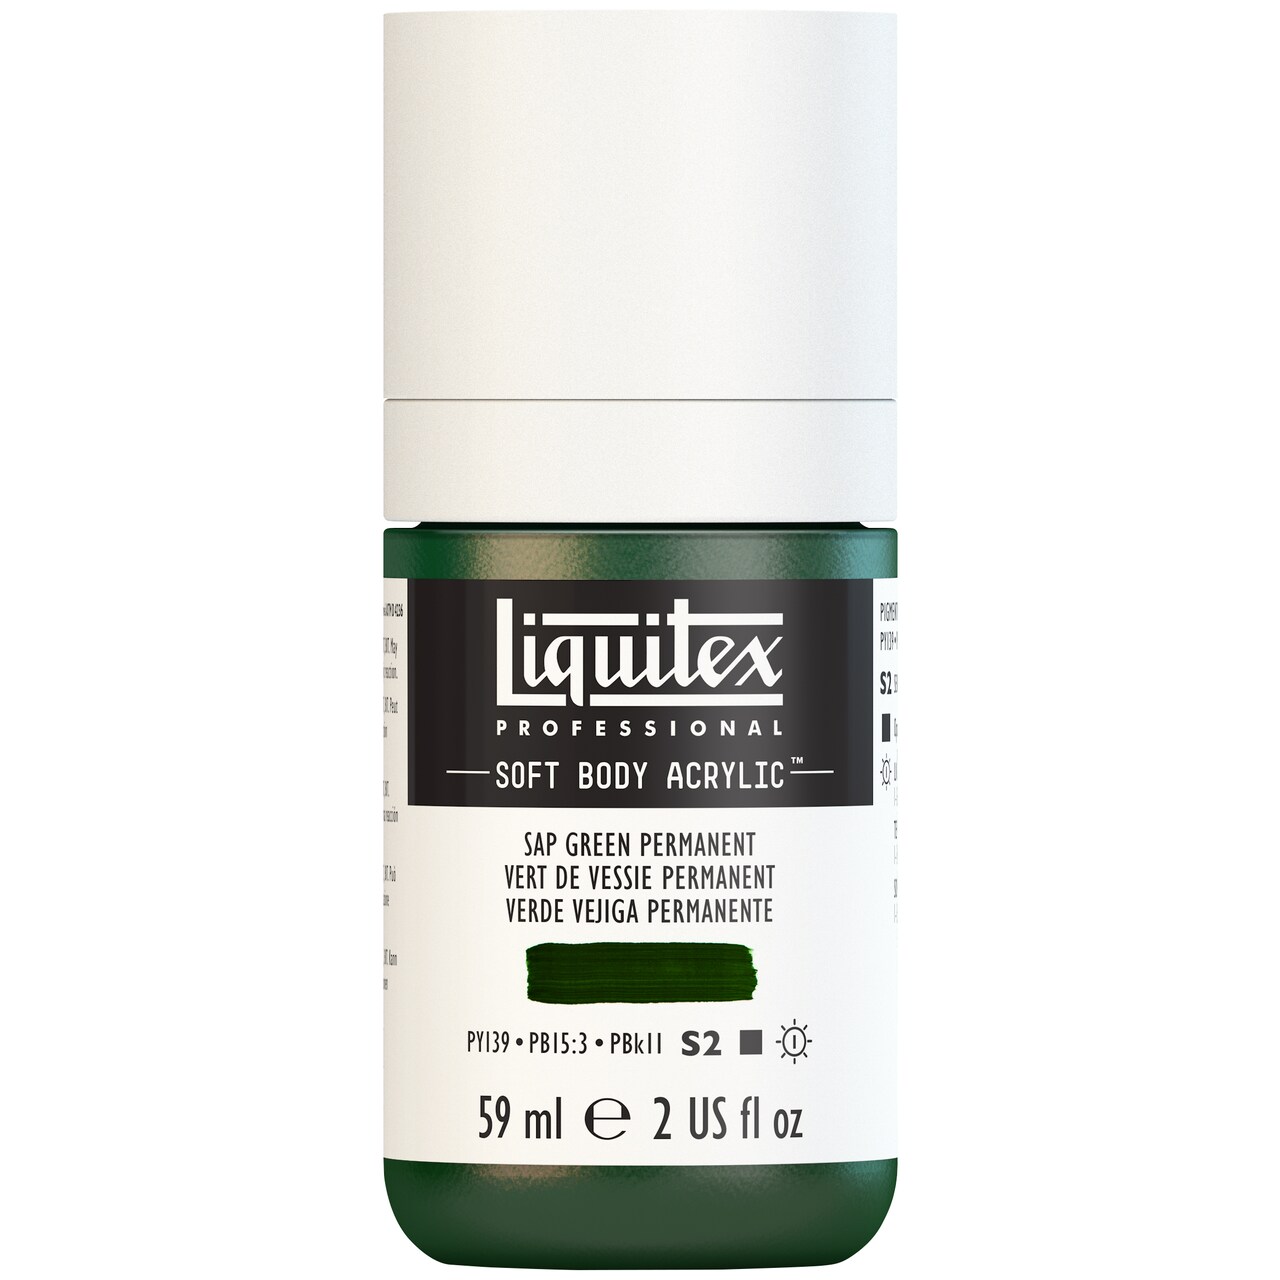 Liquitex Professional Soft Body Acrylic Color, 2 Oz., Sap Green Permanent